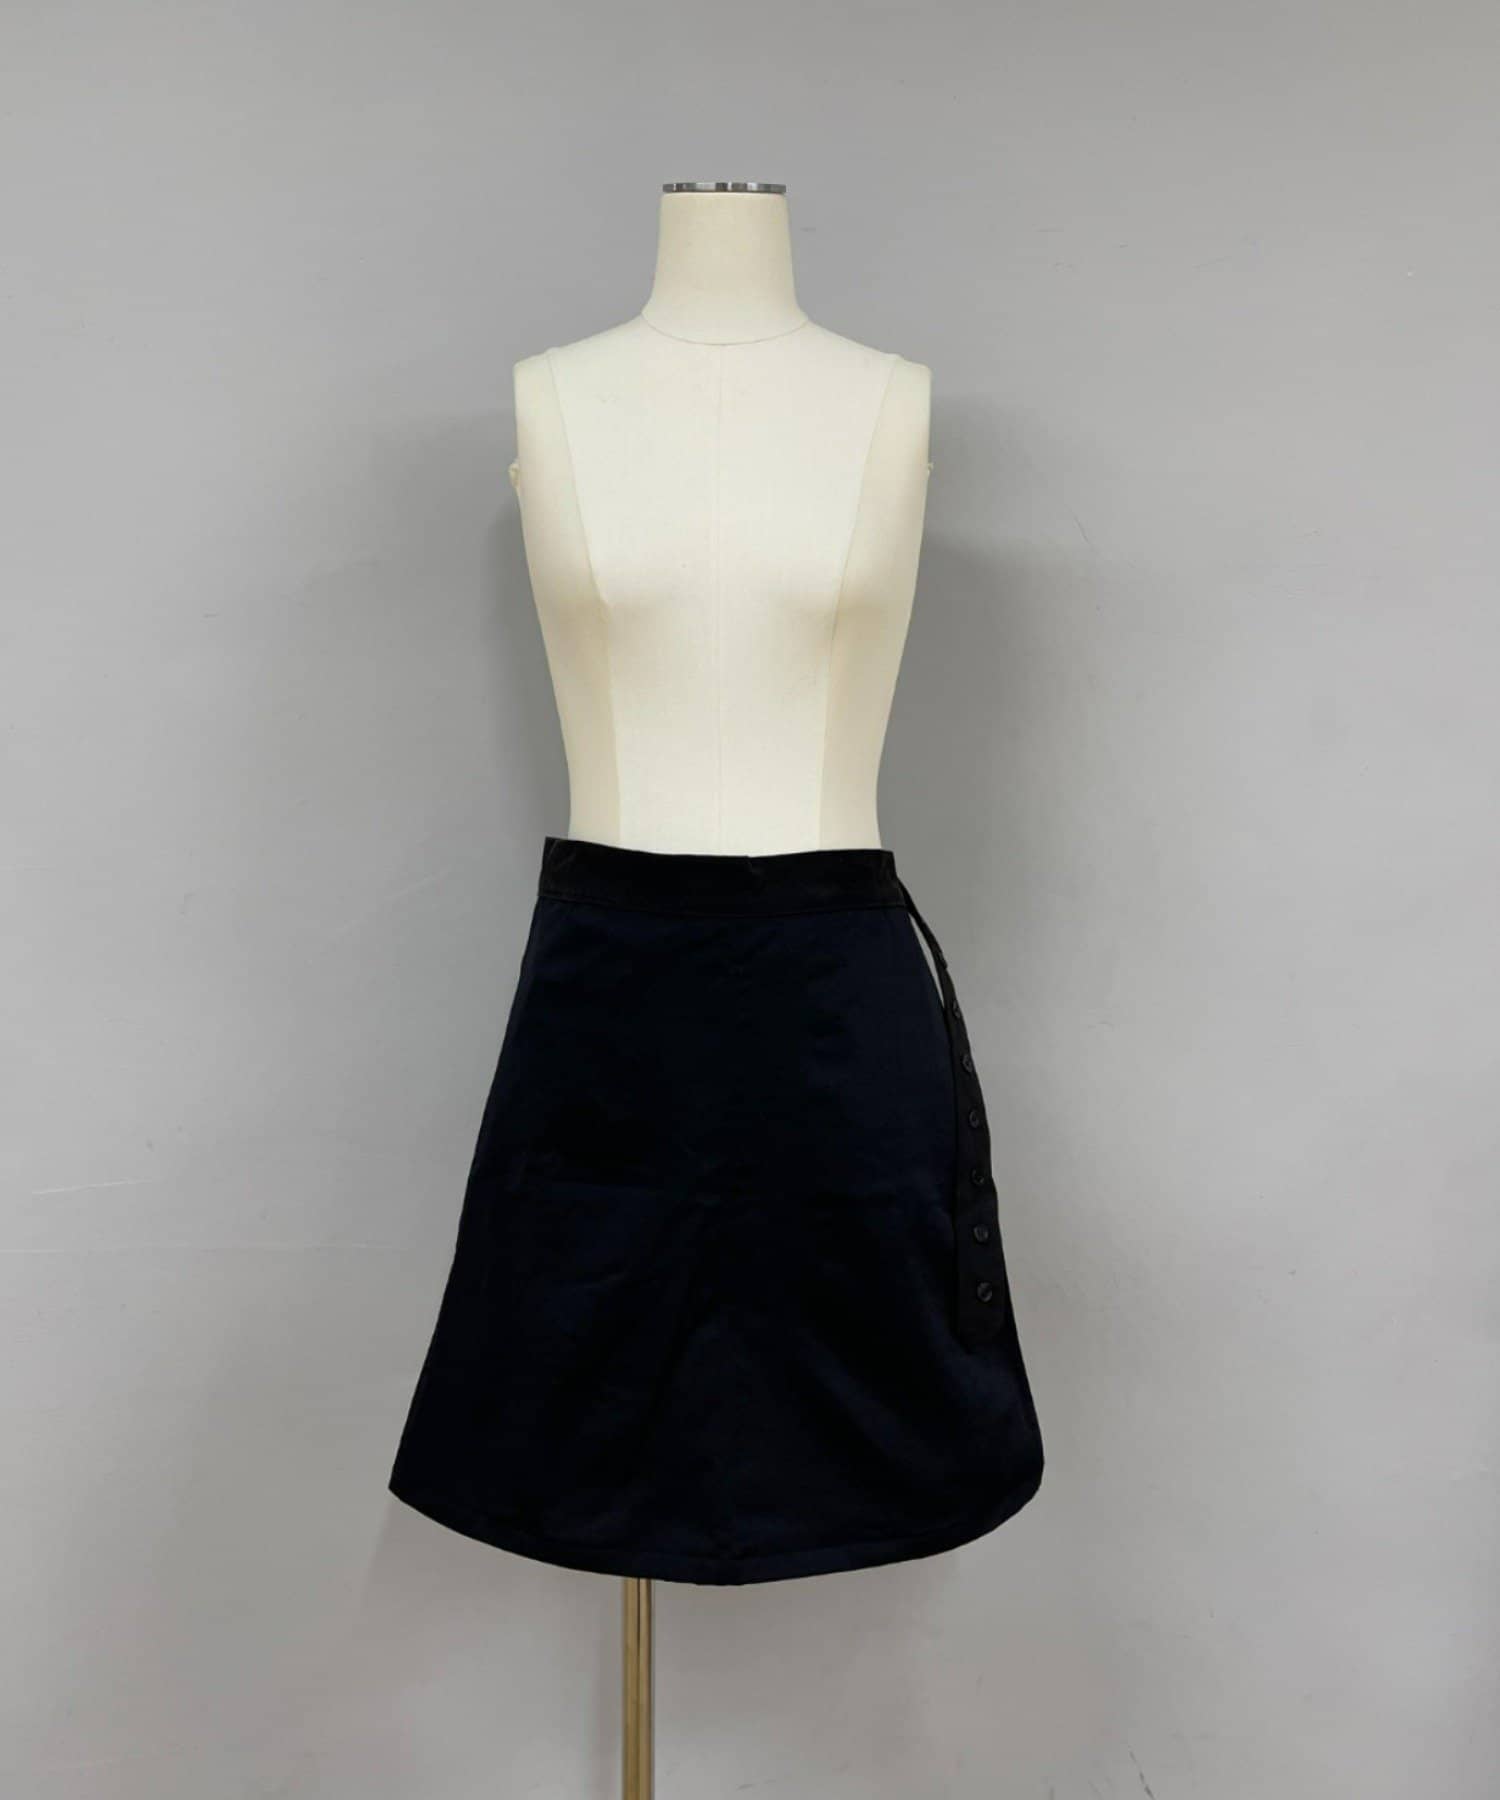 Pasterip(パセリ) Gather pocket skirt belt